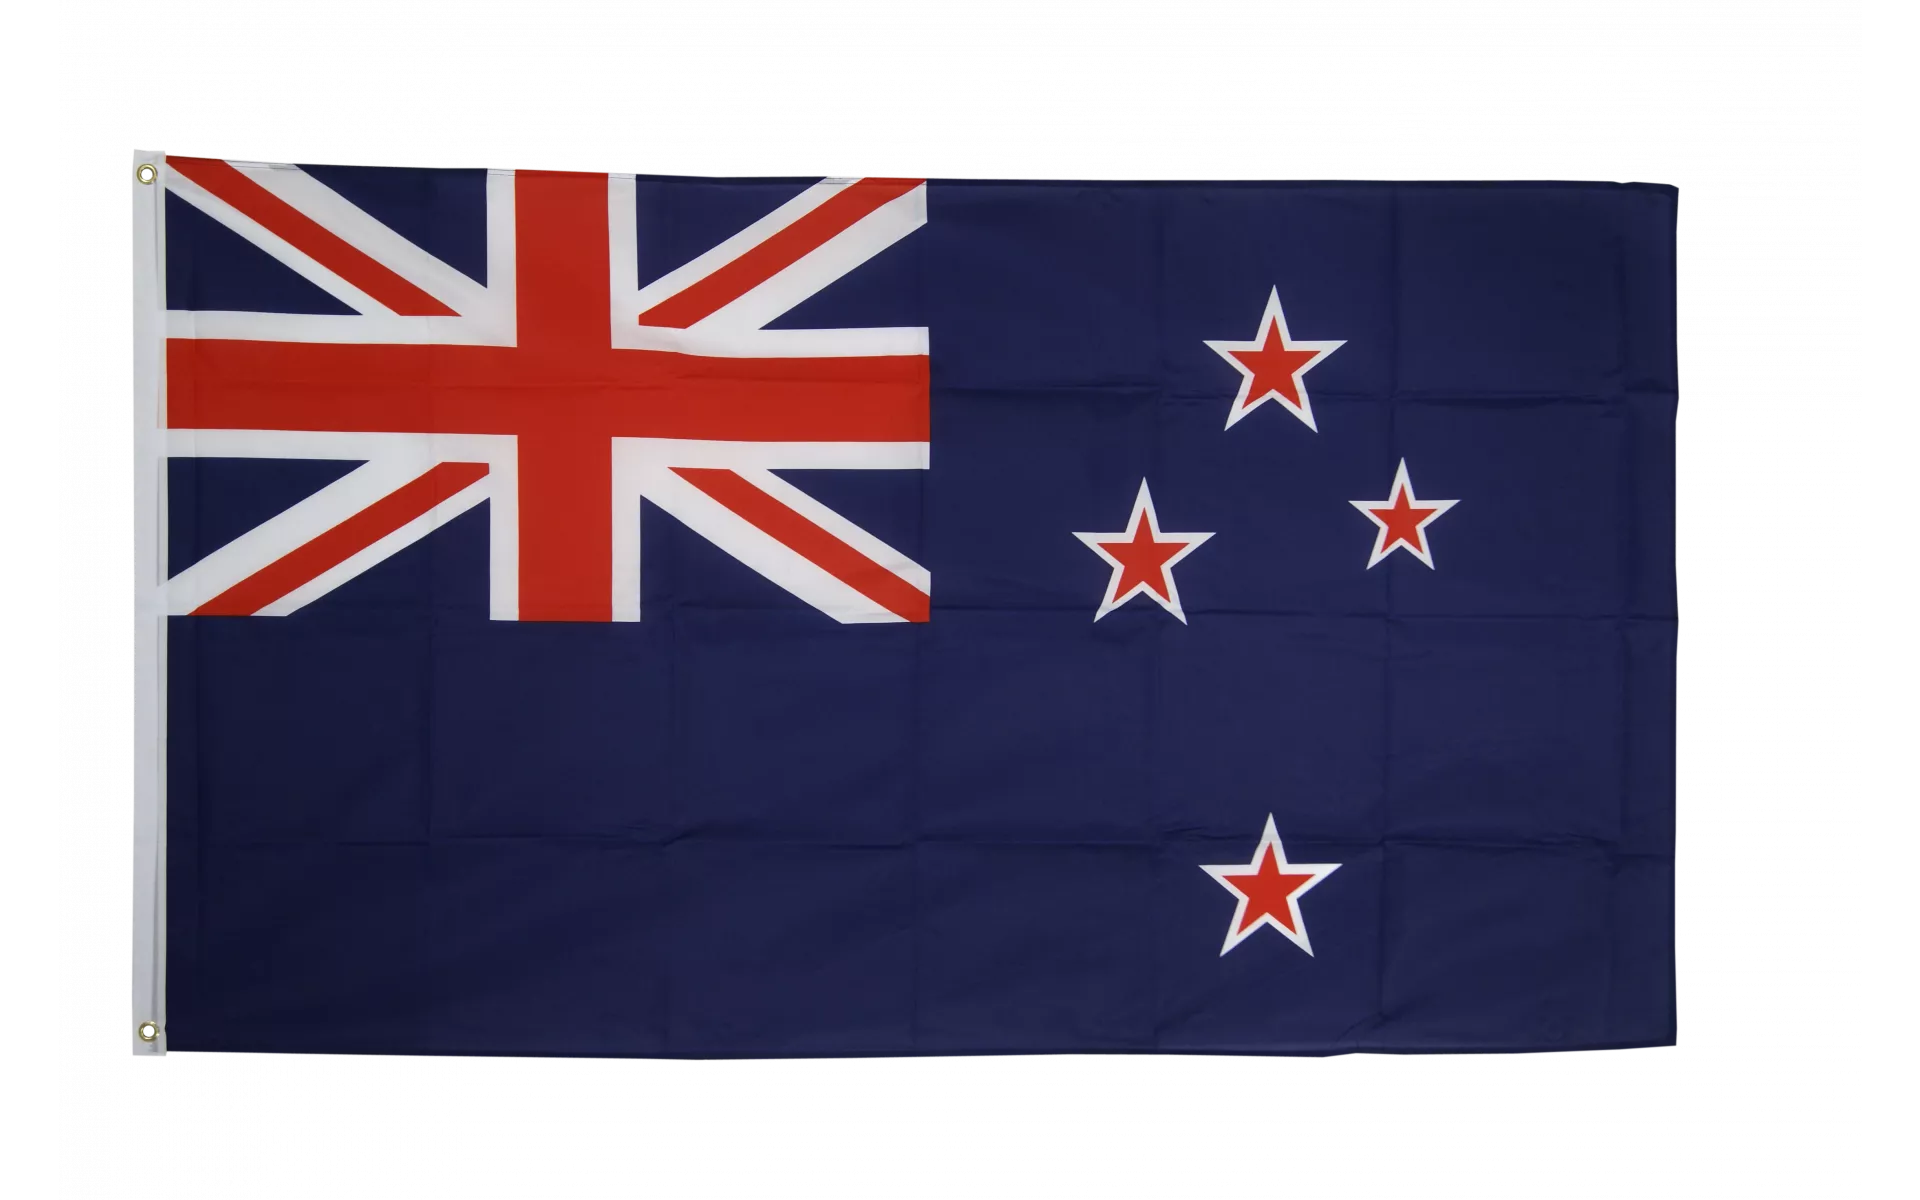 Fahne Flagge Neuseeland 90 x 150 cm